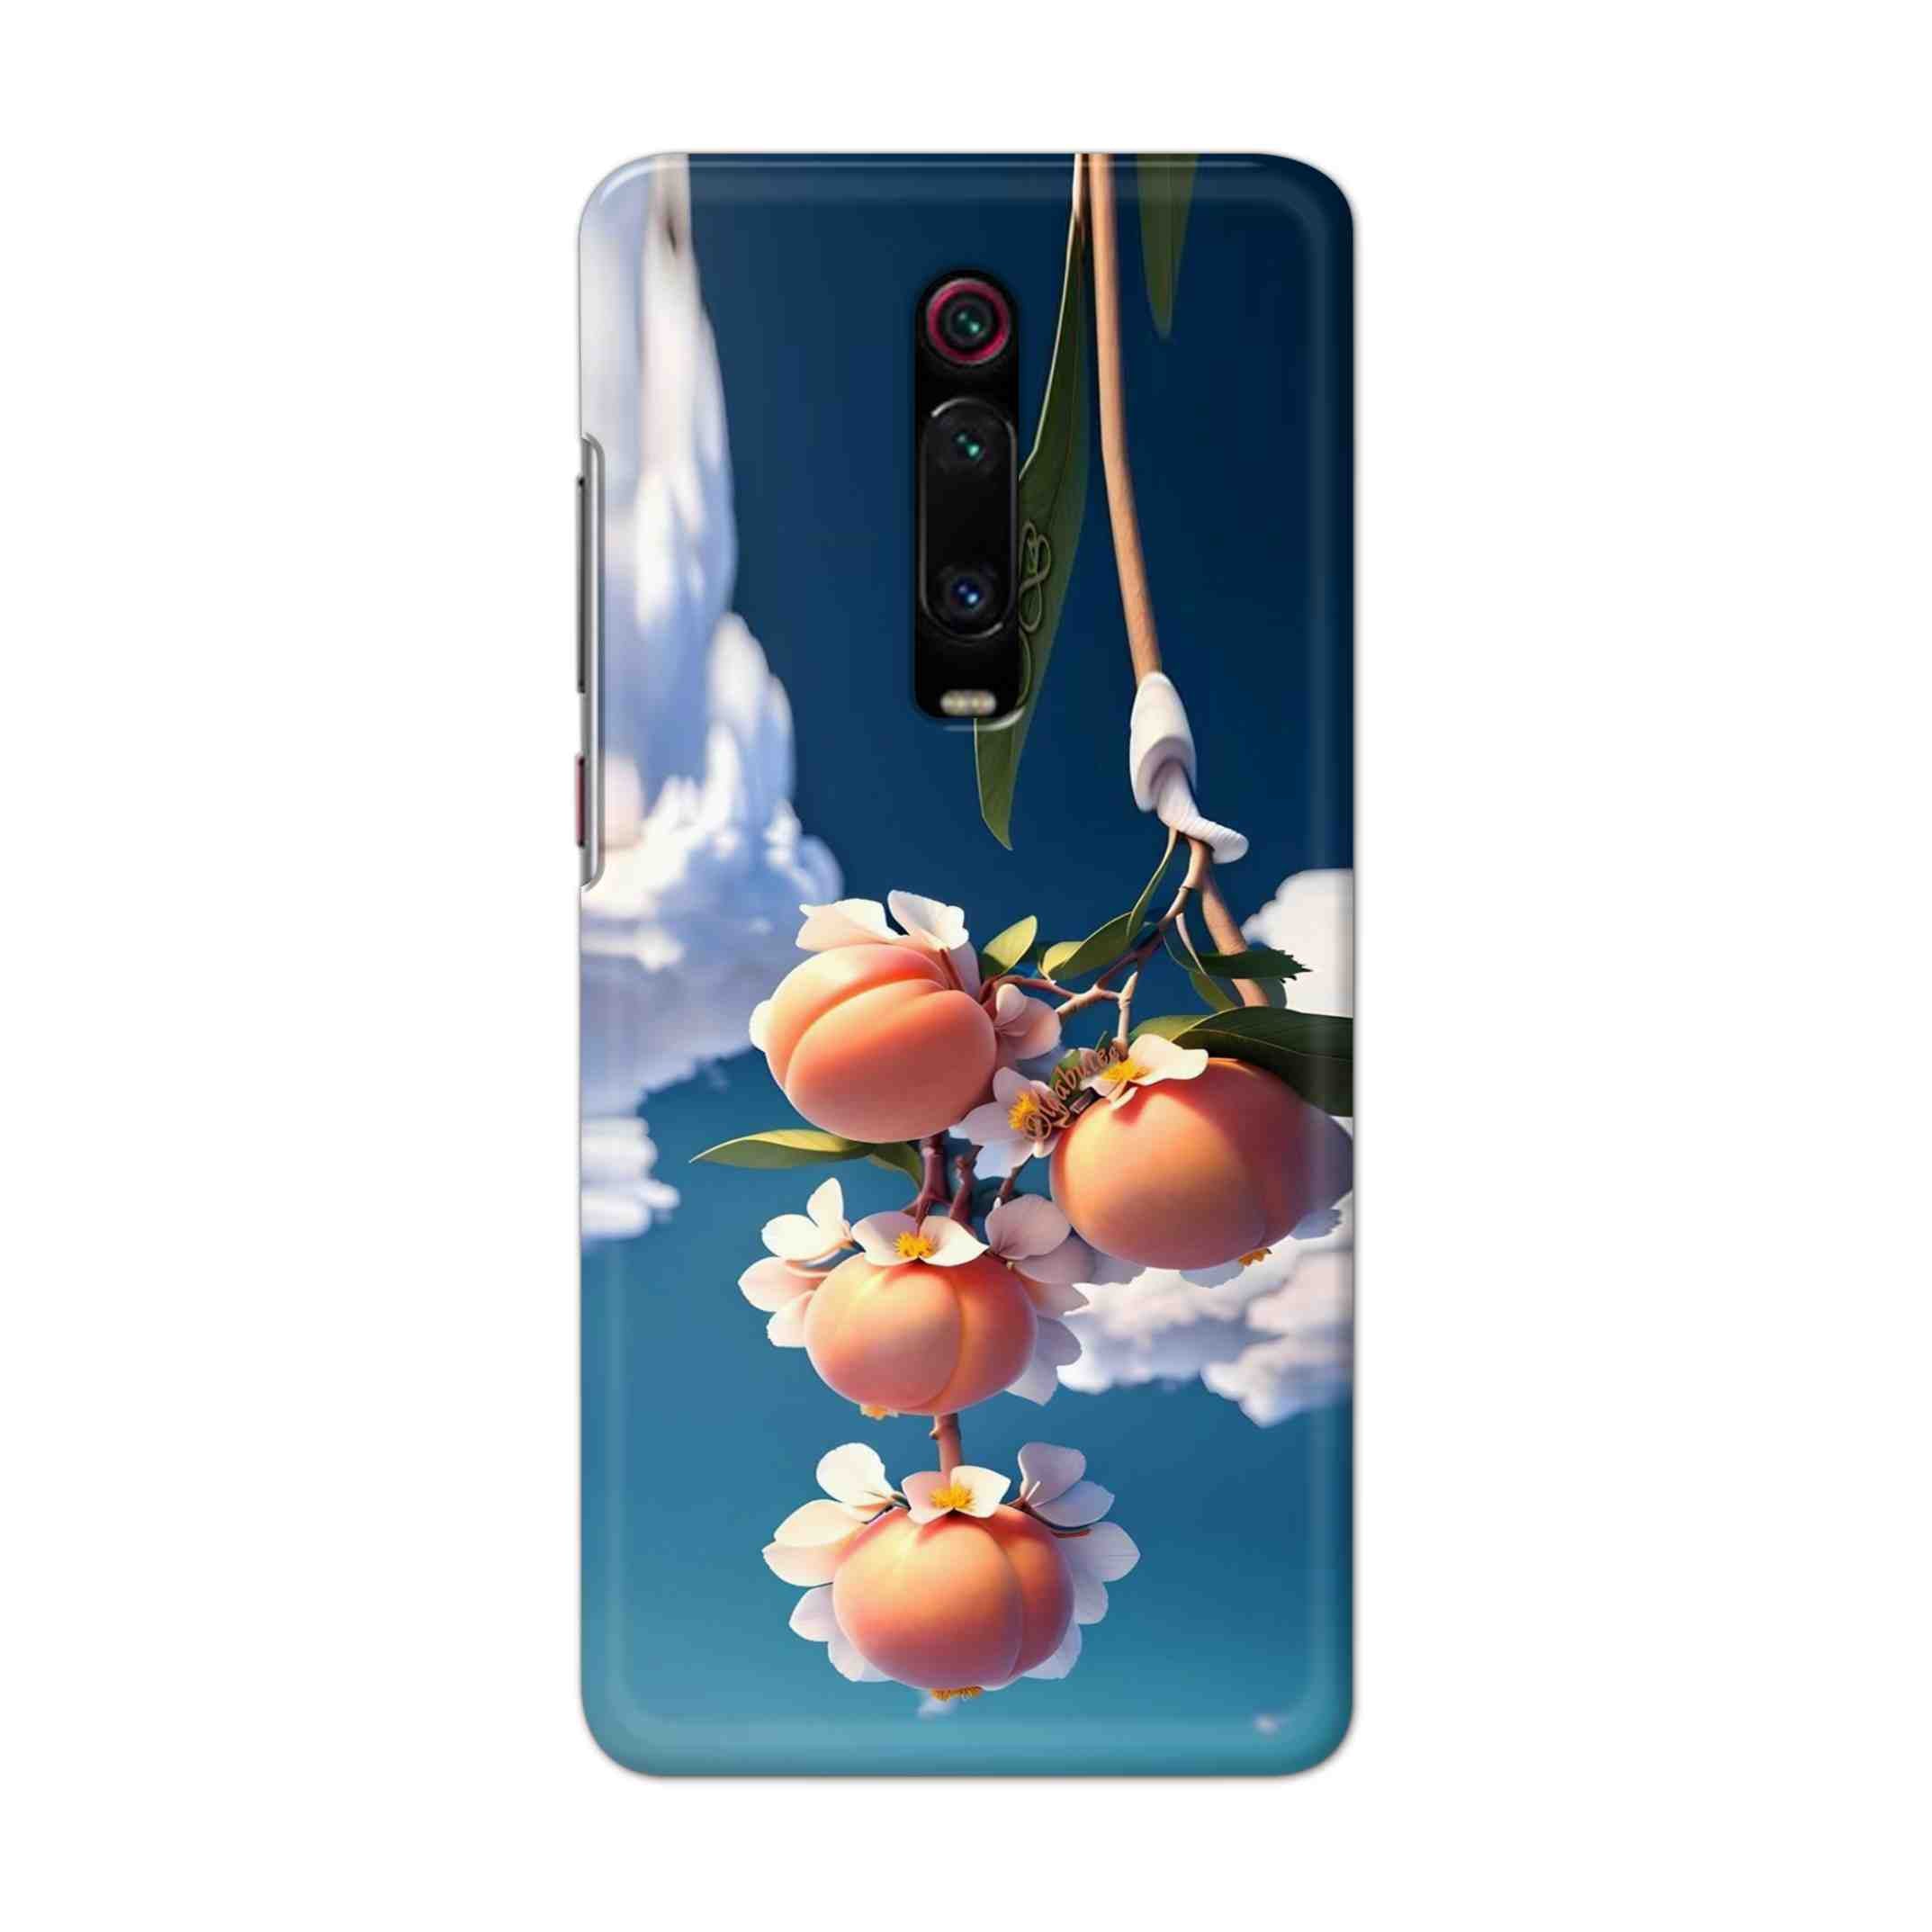 Buy Fruit Hard Back Mobile Phone Case Cover For Xiaomi Redmi K20 Online